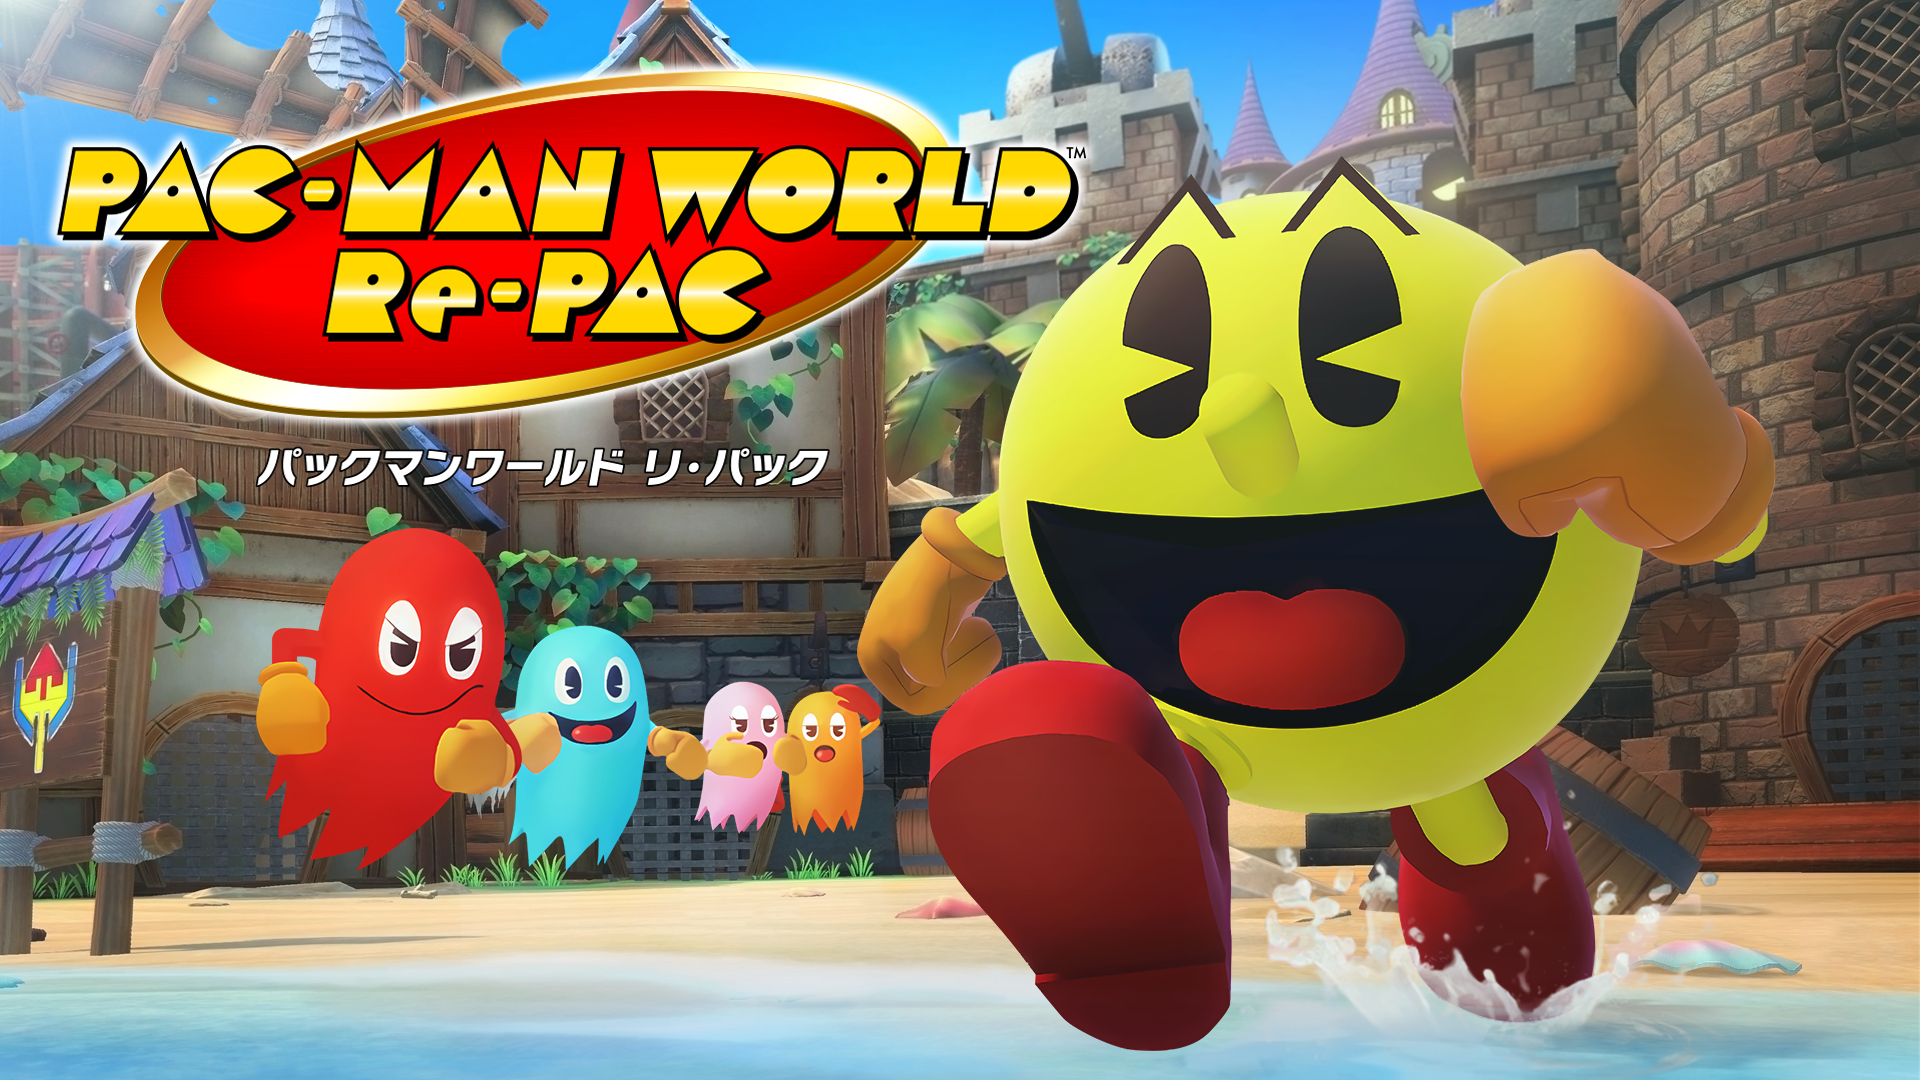  PAC-MAN WORLD™ Re-PAC & (C)Bandai Namco Entertainment Inc.